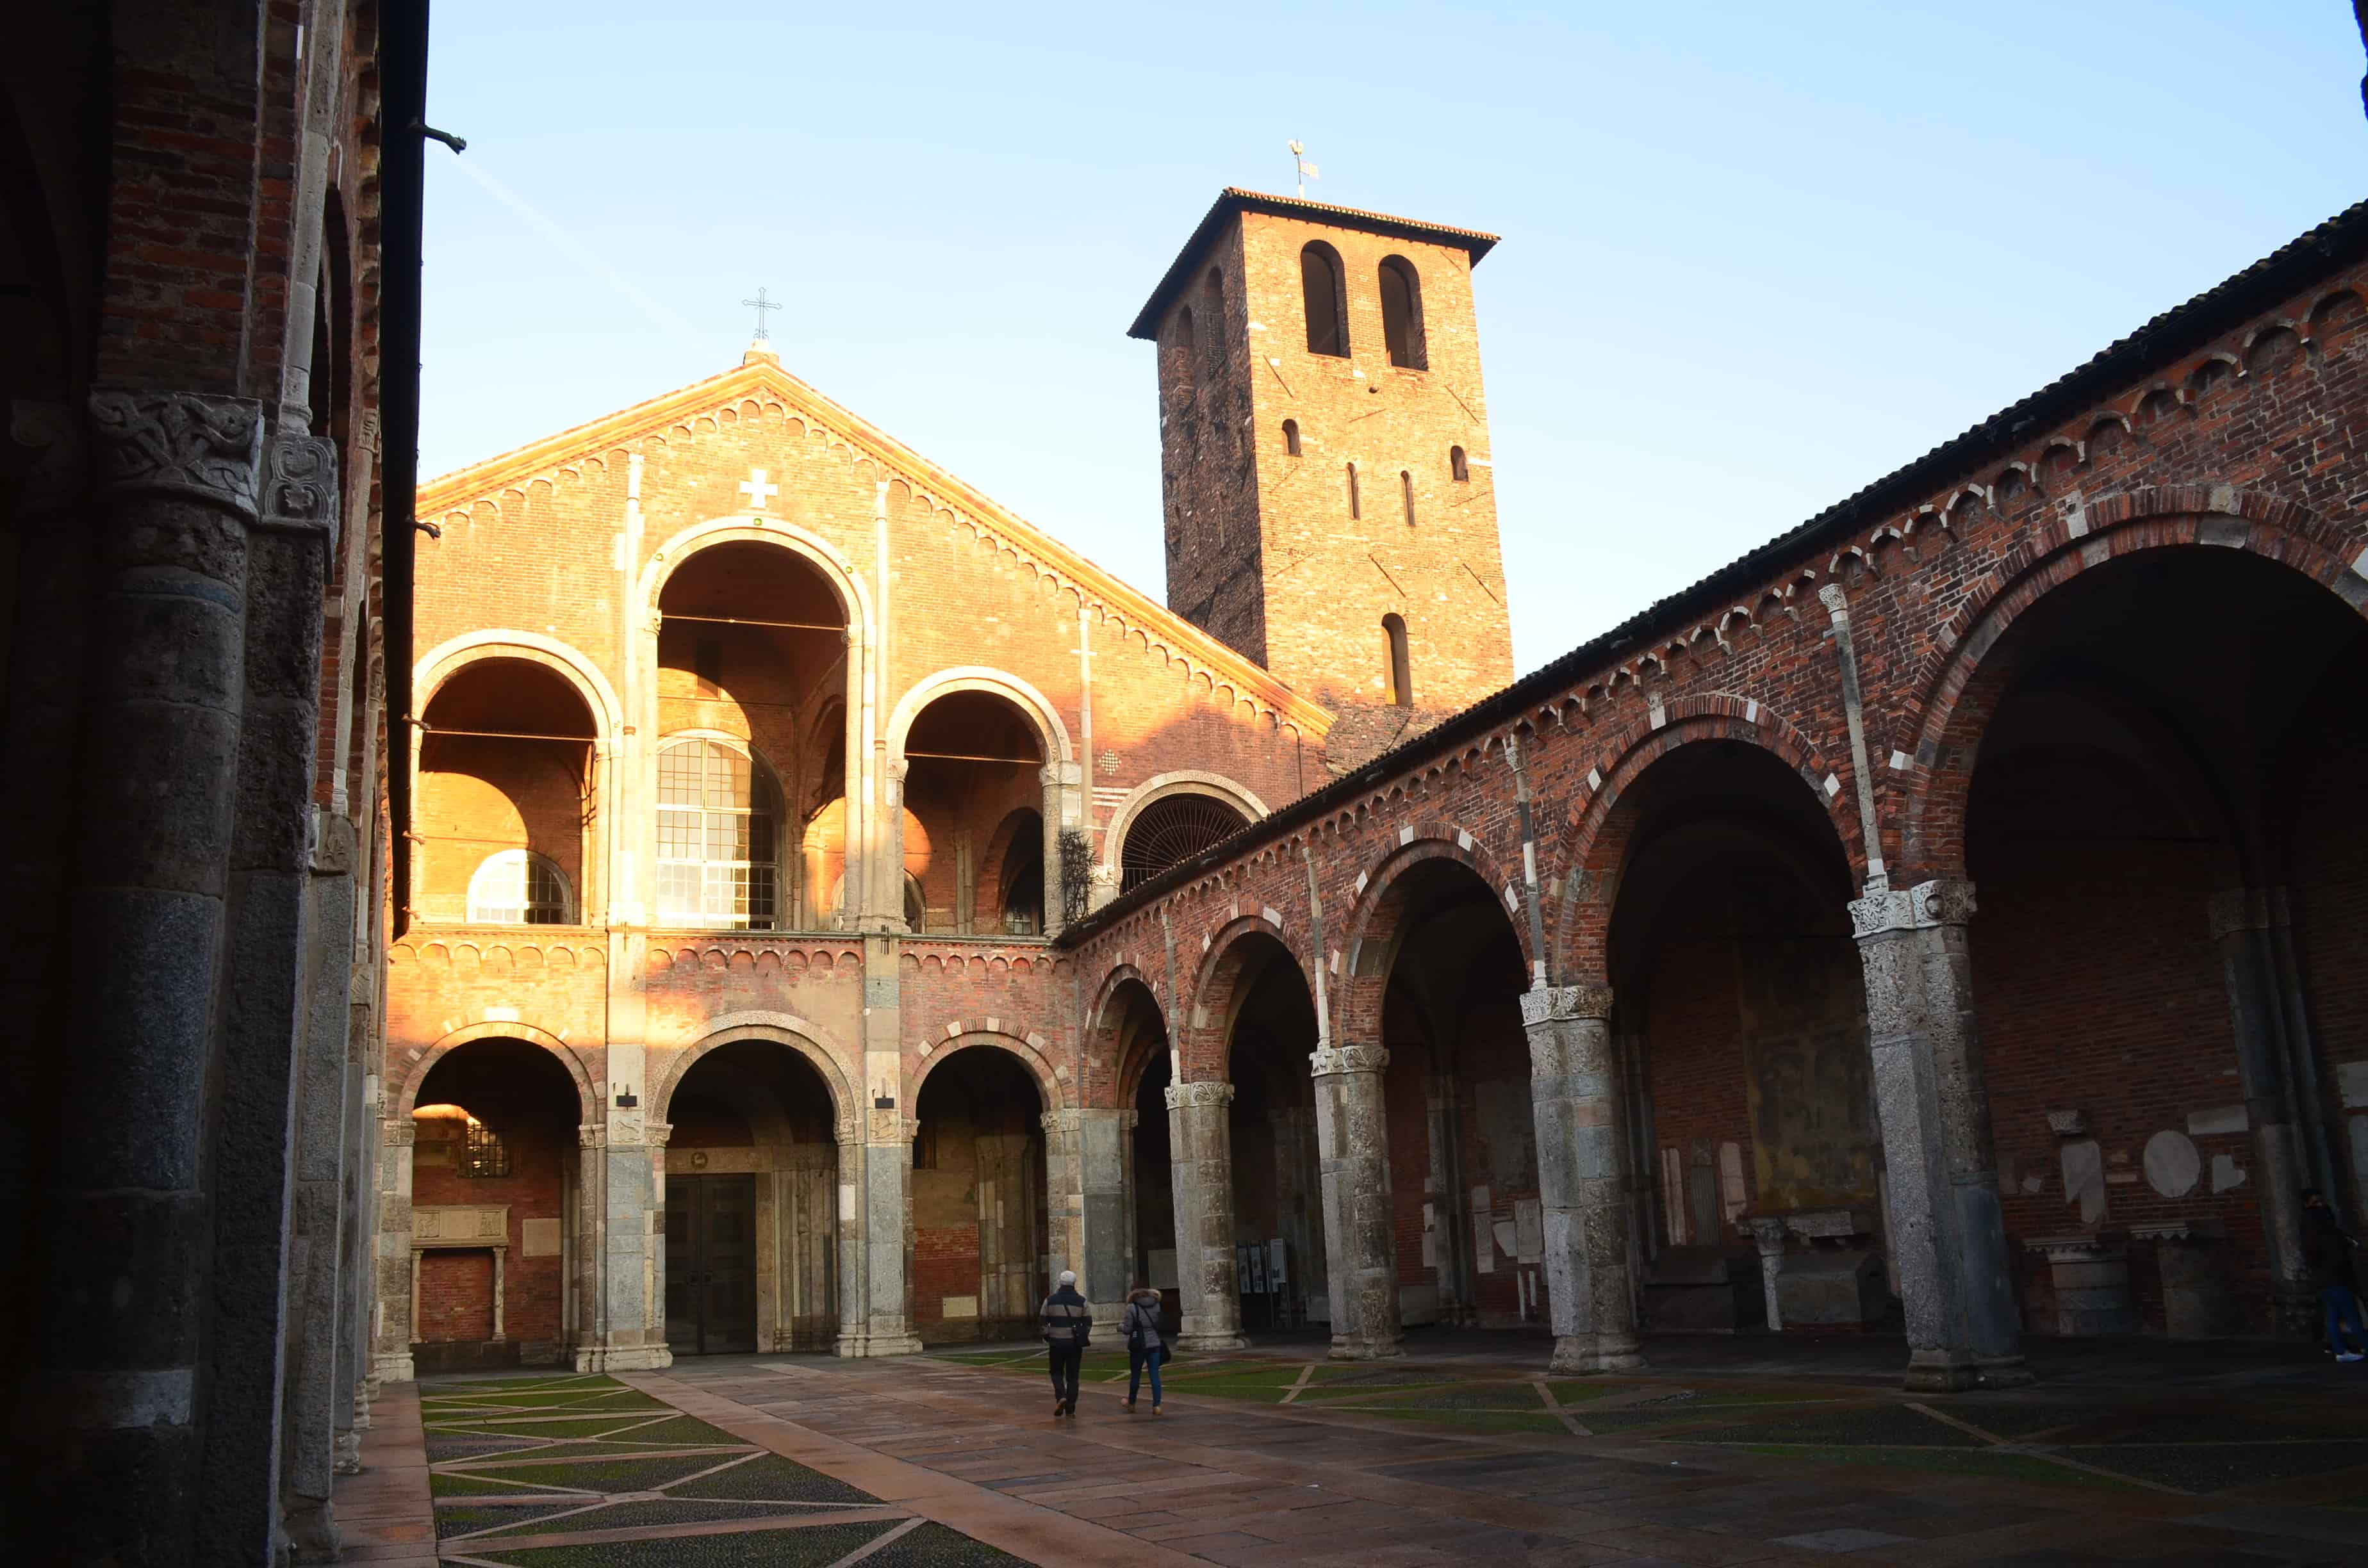 Courtyard at the Basilica of Saint Ambrose in Milan, Italy